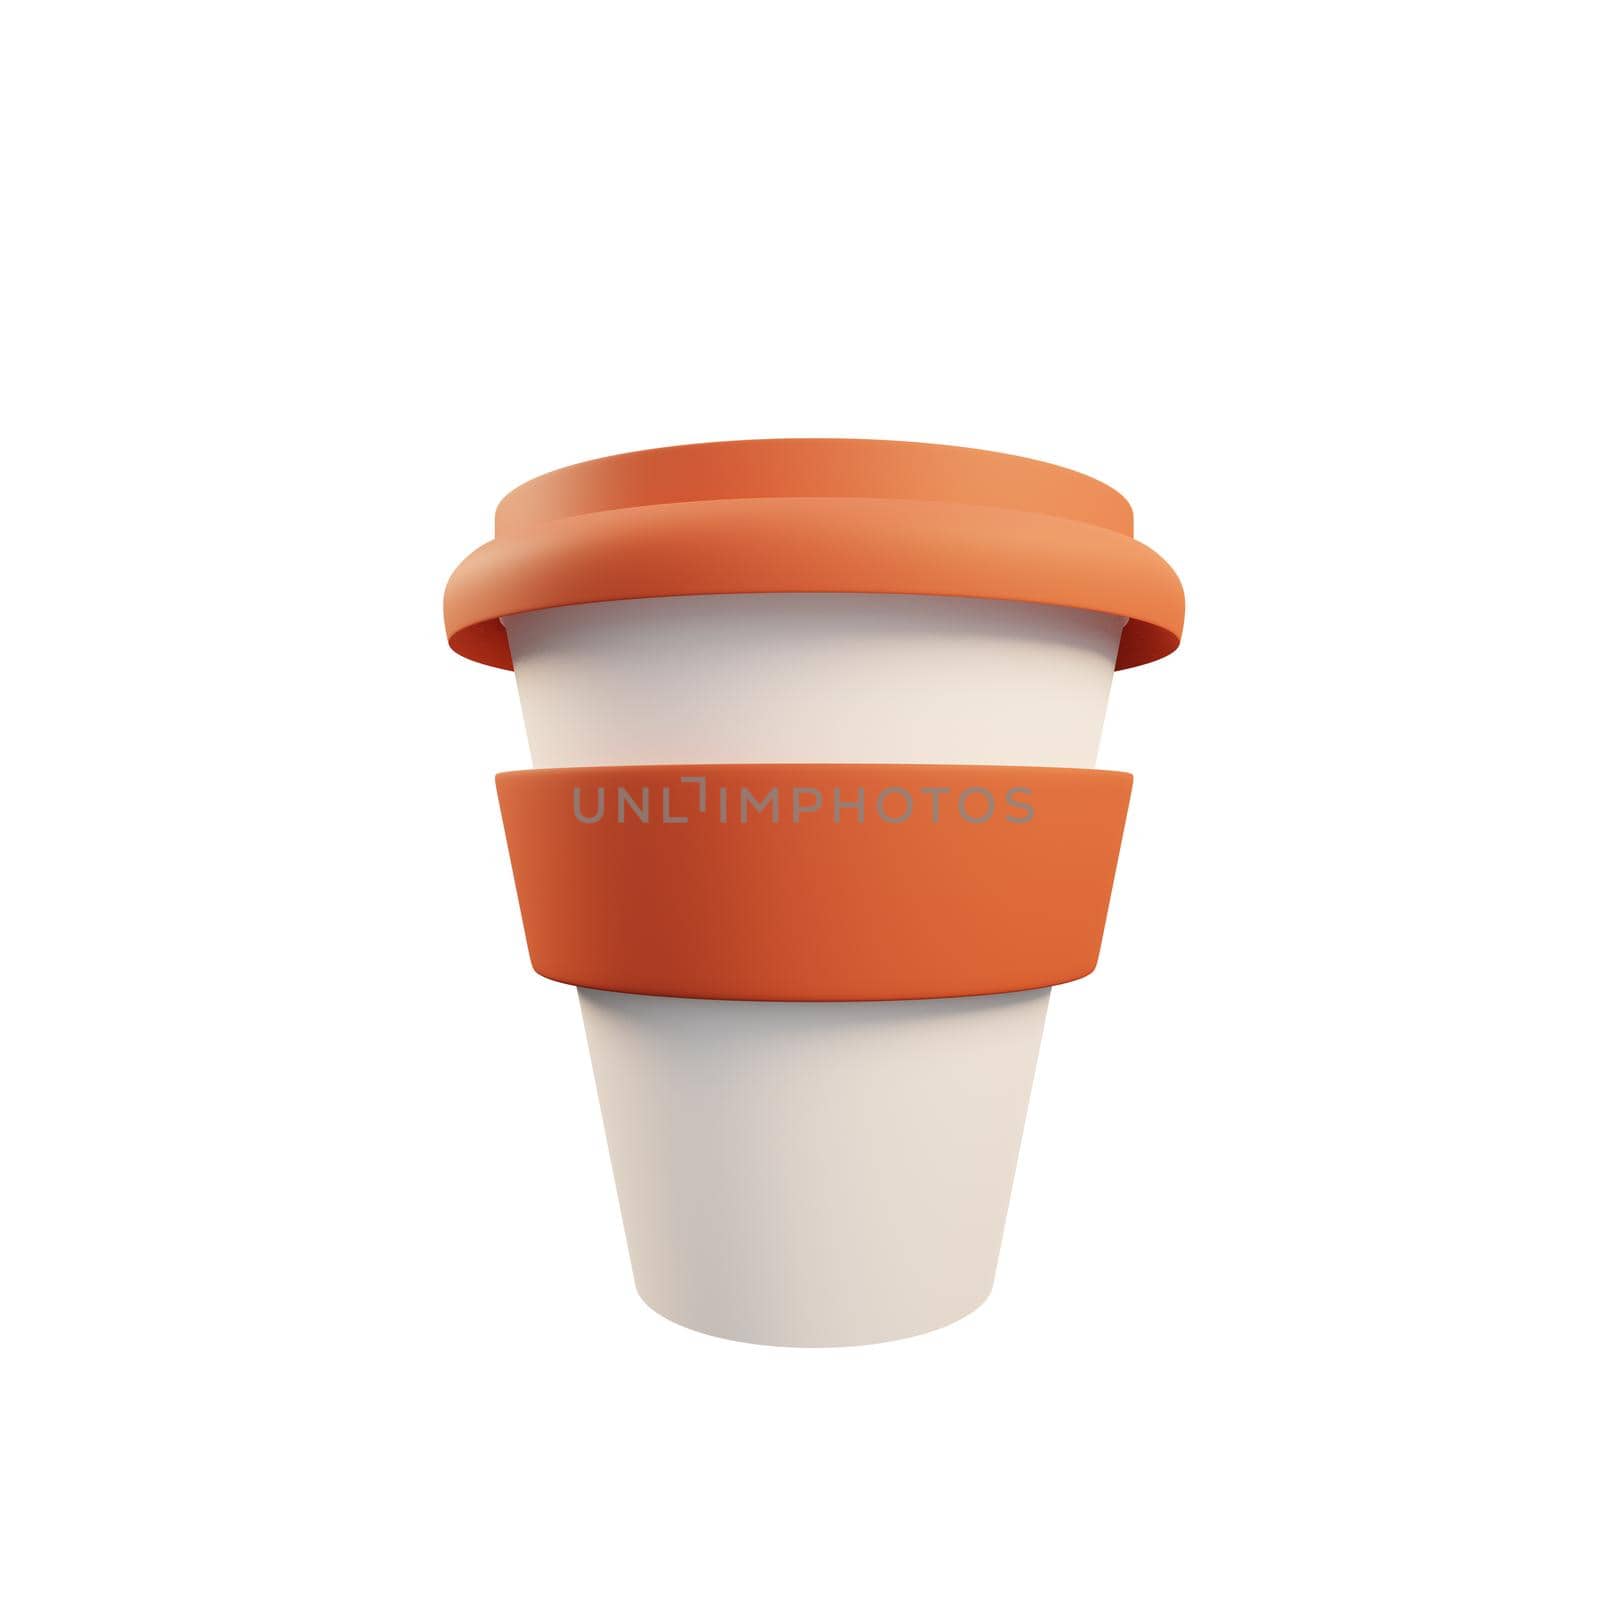 3d rendering of plastic cups